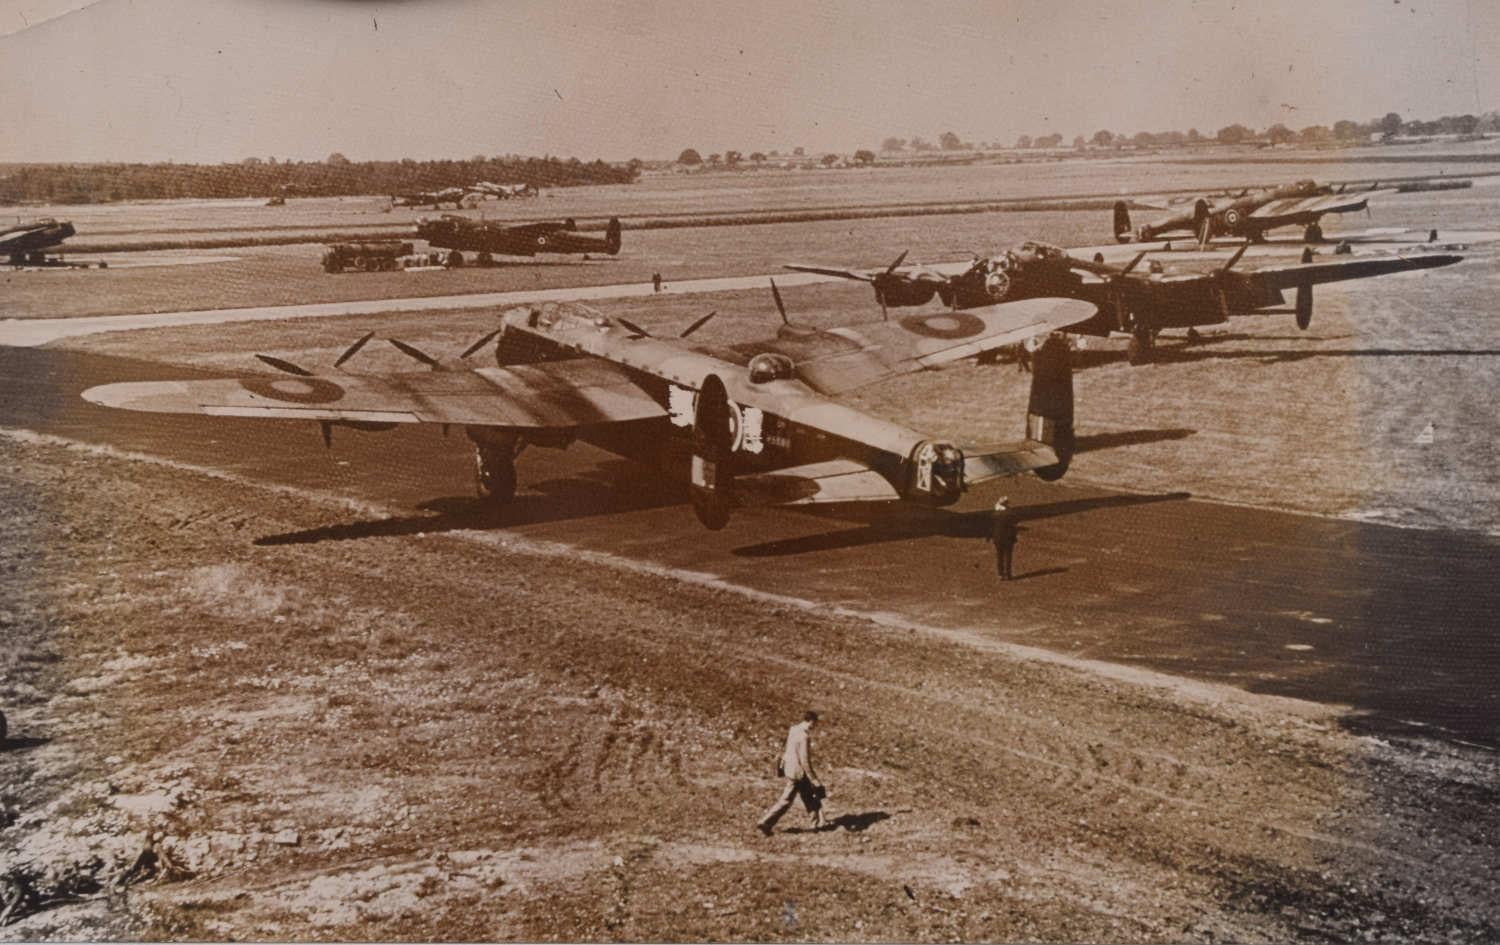 Unknown Black and White Photograph – Avro Lancaster Bomber VN-N R5689 Original Pressefotografie 1942 für Aeroplane